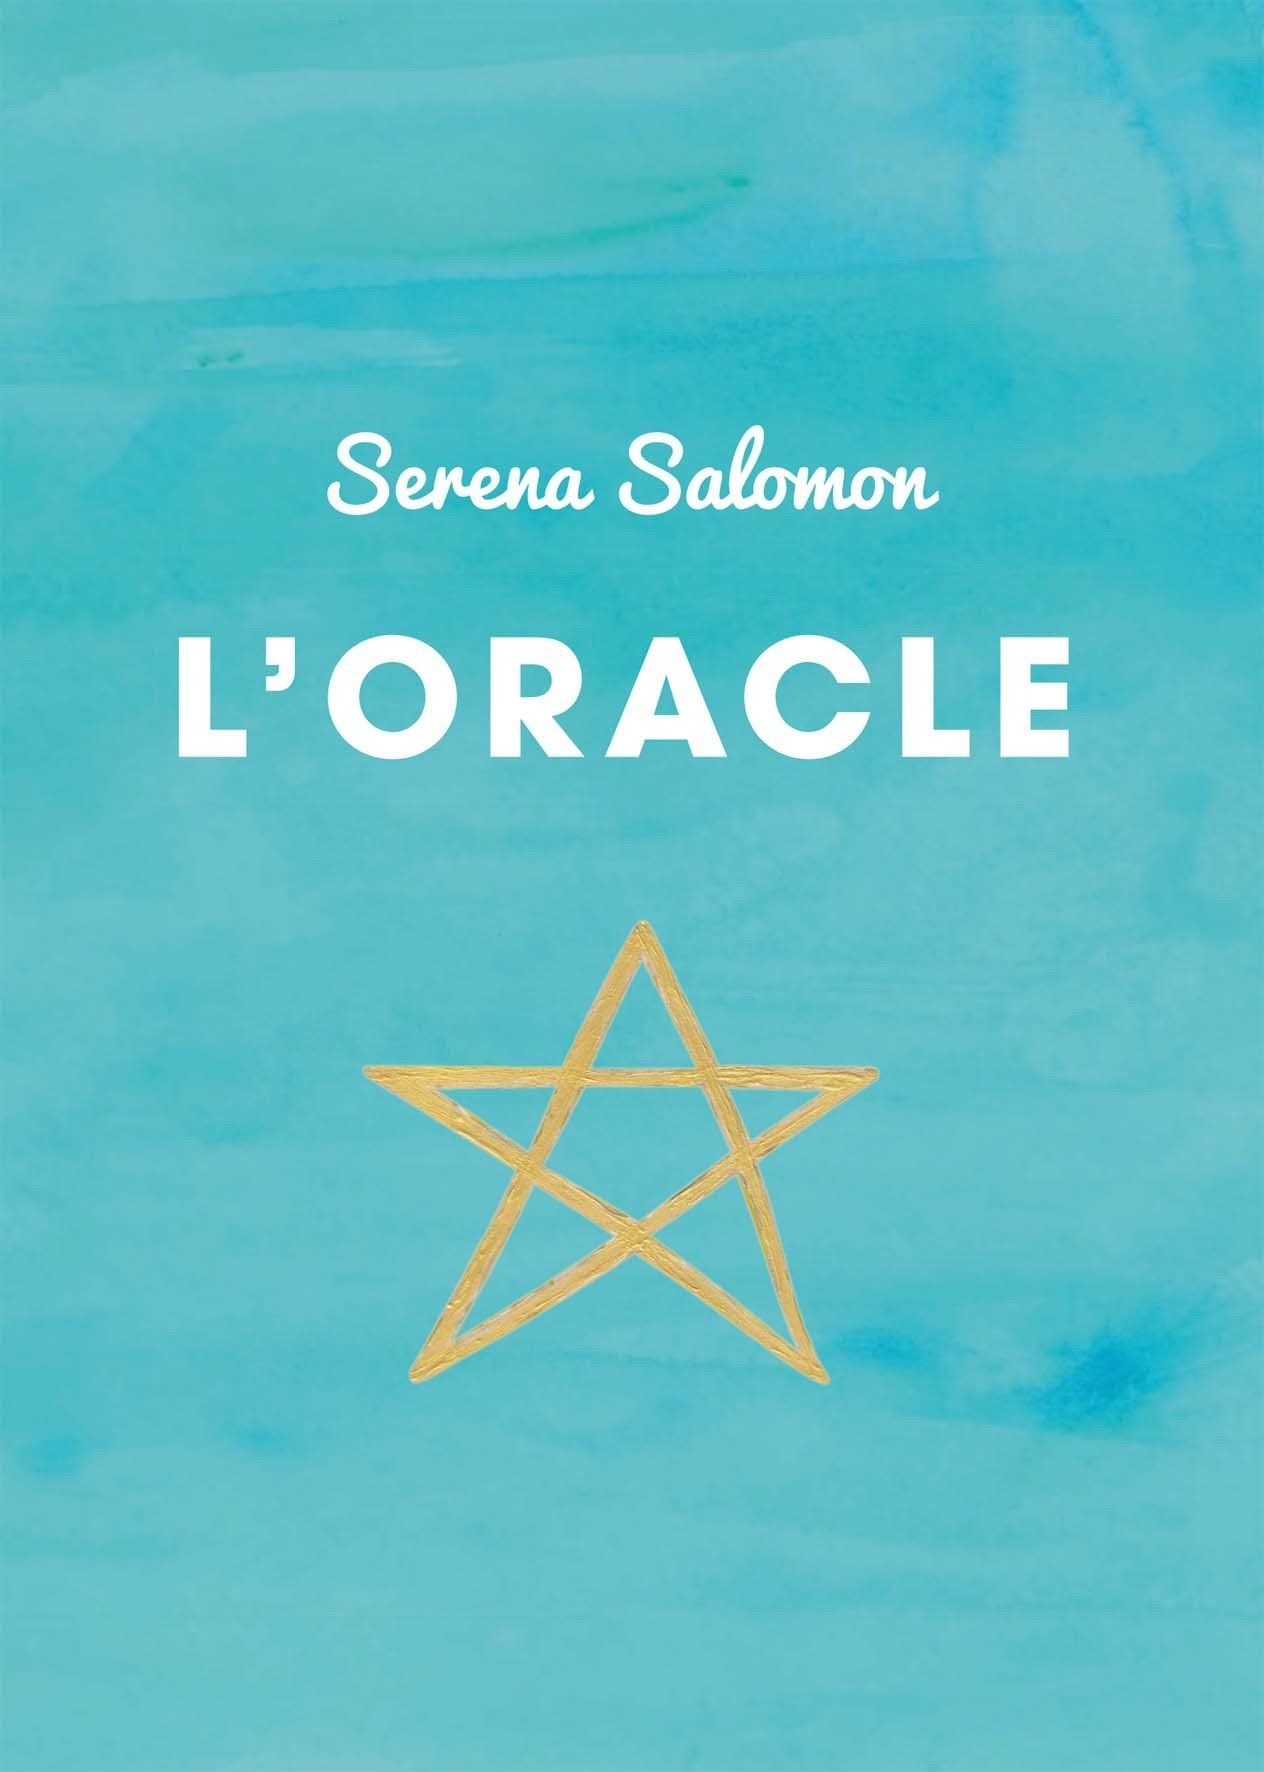 Livre Oracle de Serena Salomon